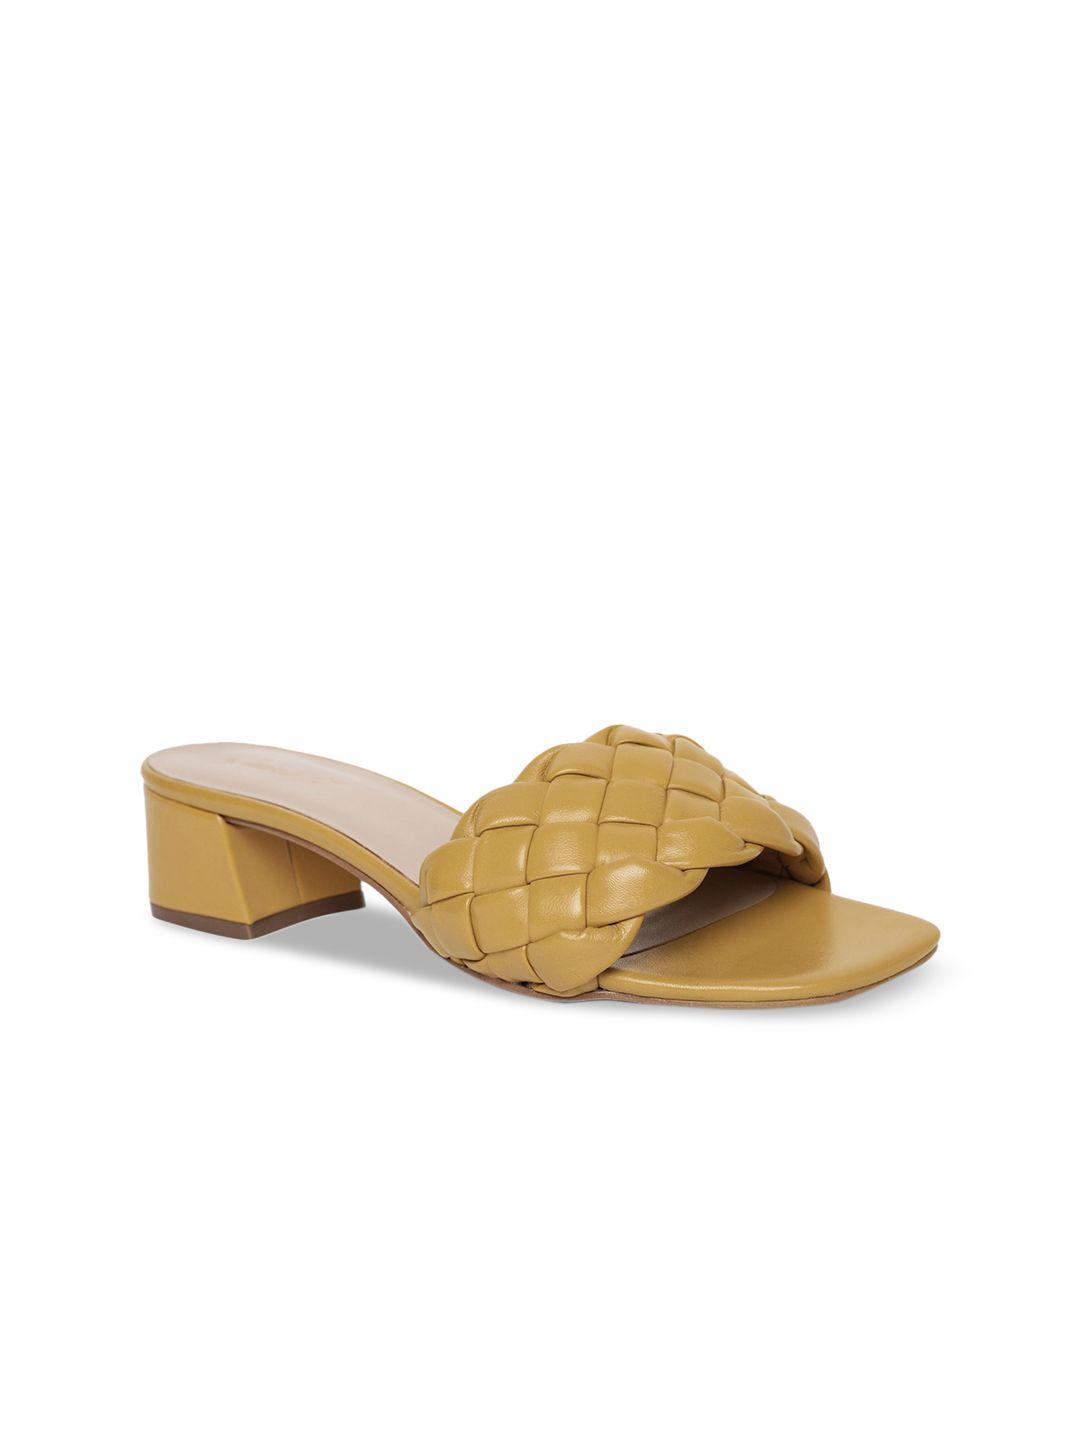 saint g yellow leather block sandals